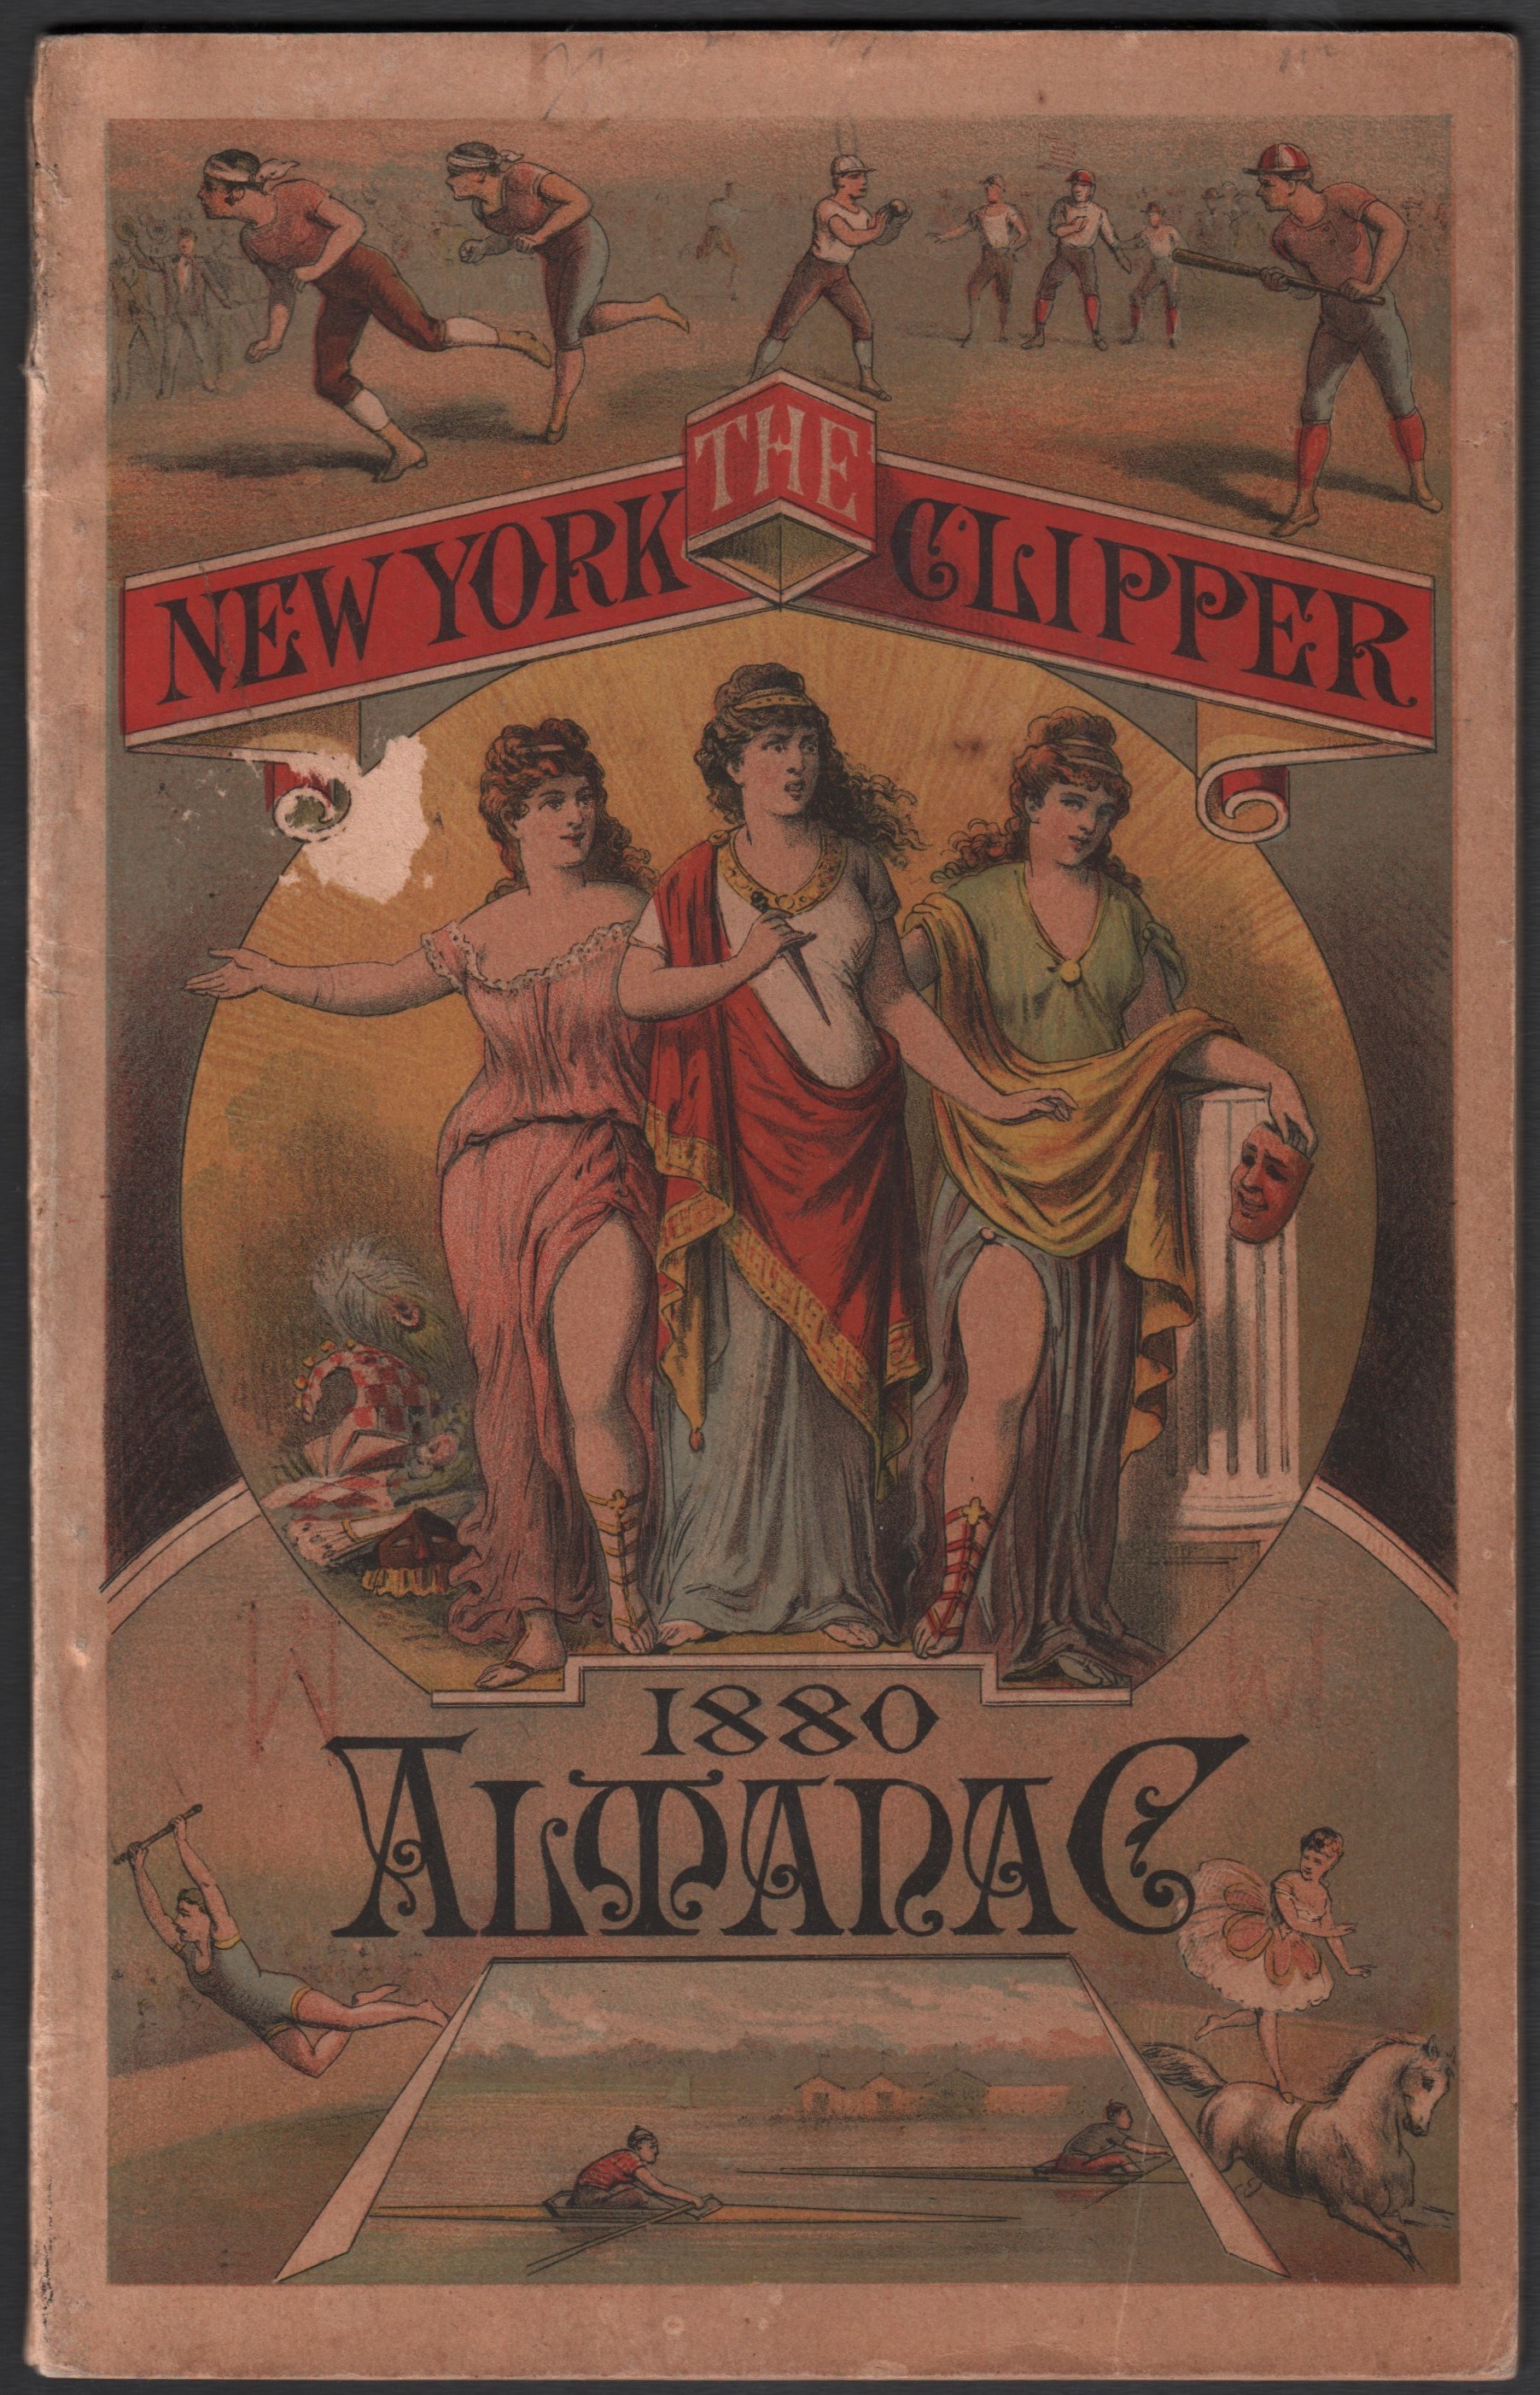 Early Baseball - The New York Clippers 1880 Almanac